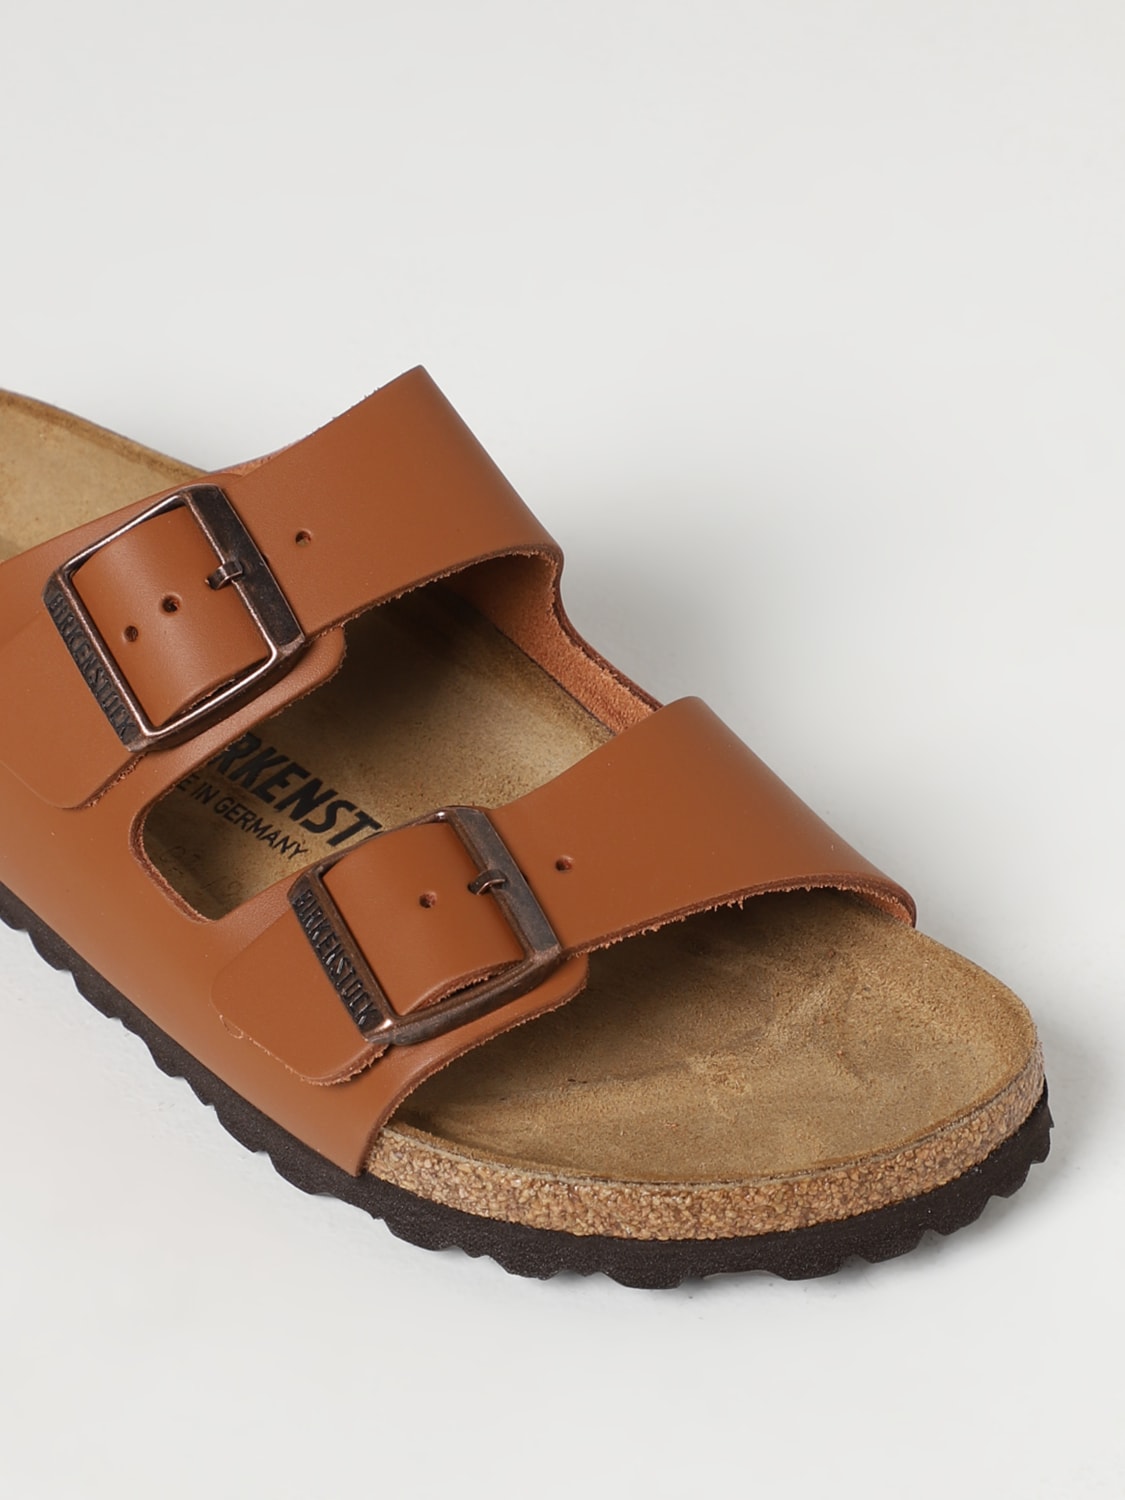 flat sandals for woman - Brown Birkenstock flat sandals 1019075 online on GIGLIO.COM